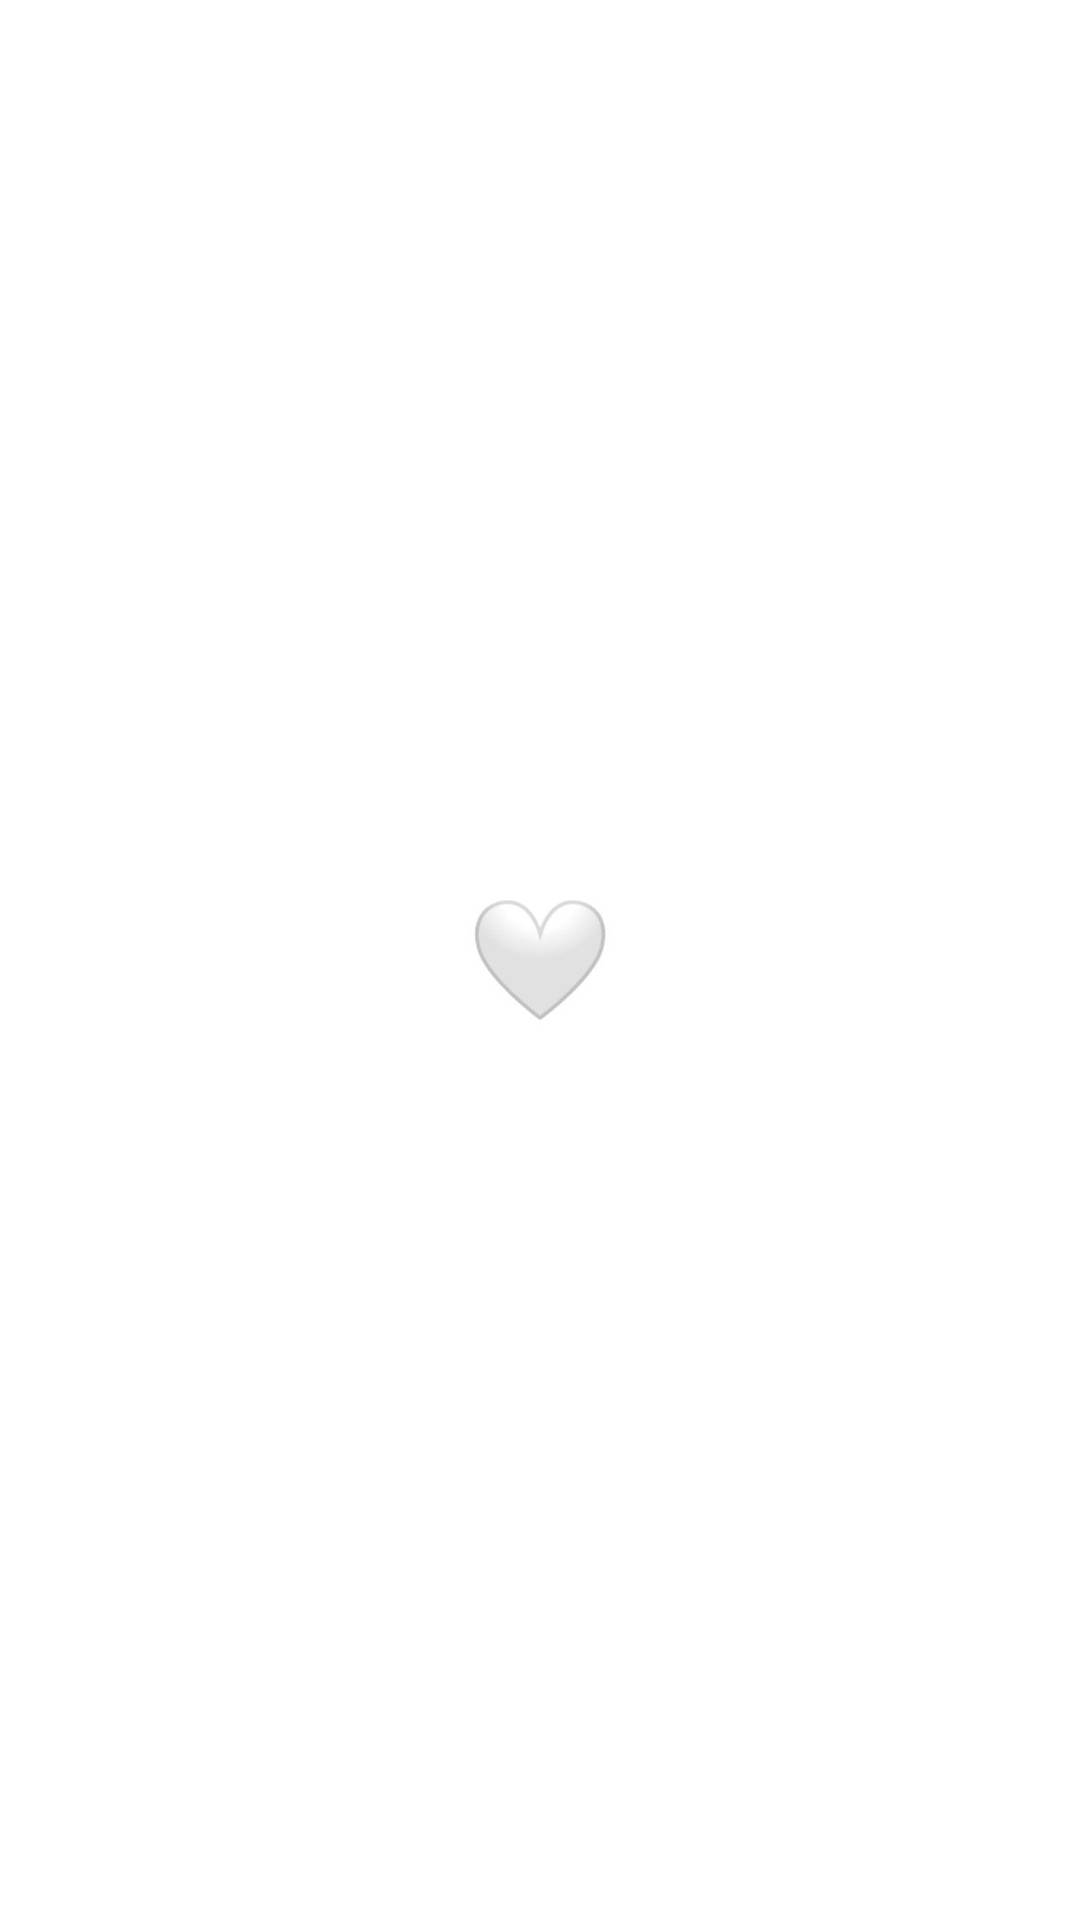 White Heart Emoticon Background